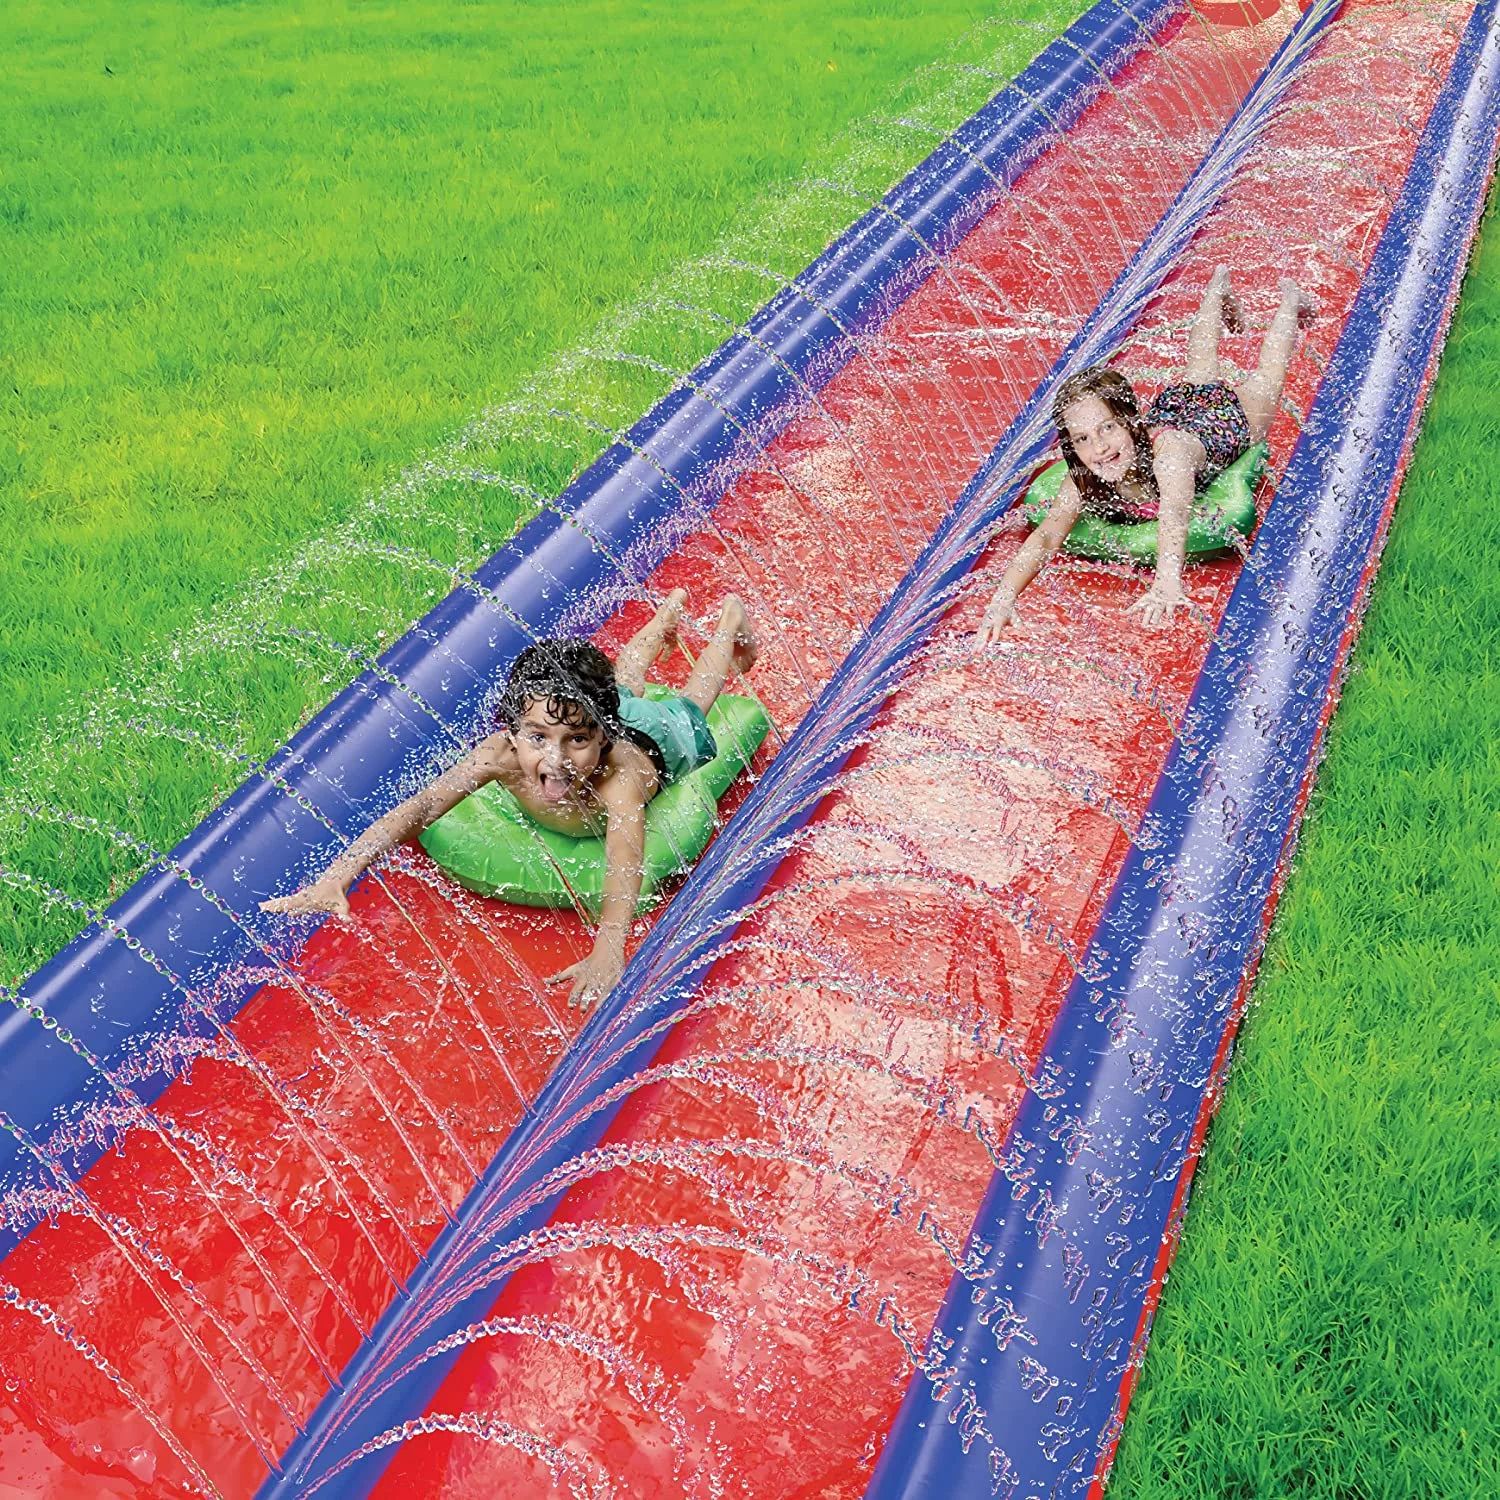 Stargo Double Lawn Slide Water Spraying Slip and Slide, Giant Backyard 25 feet Slide with 2 Infla... | Walmart (US)